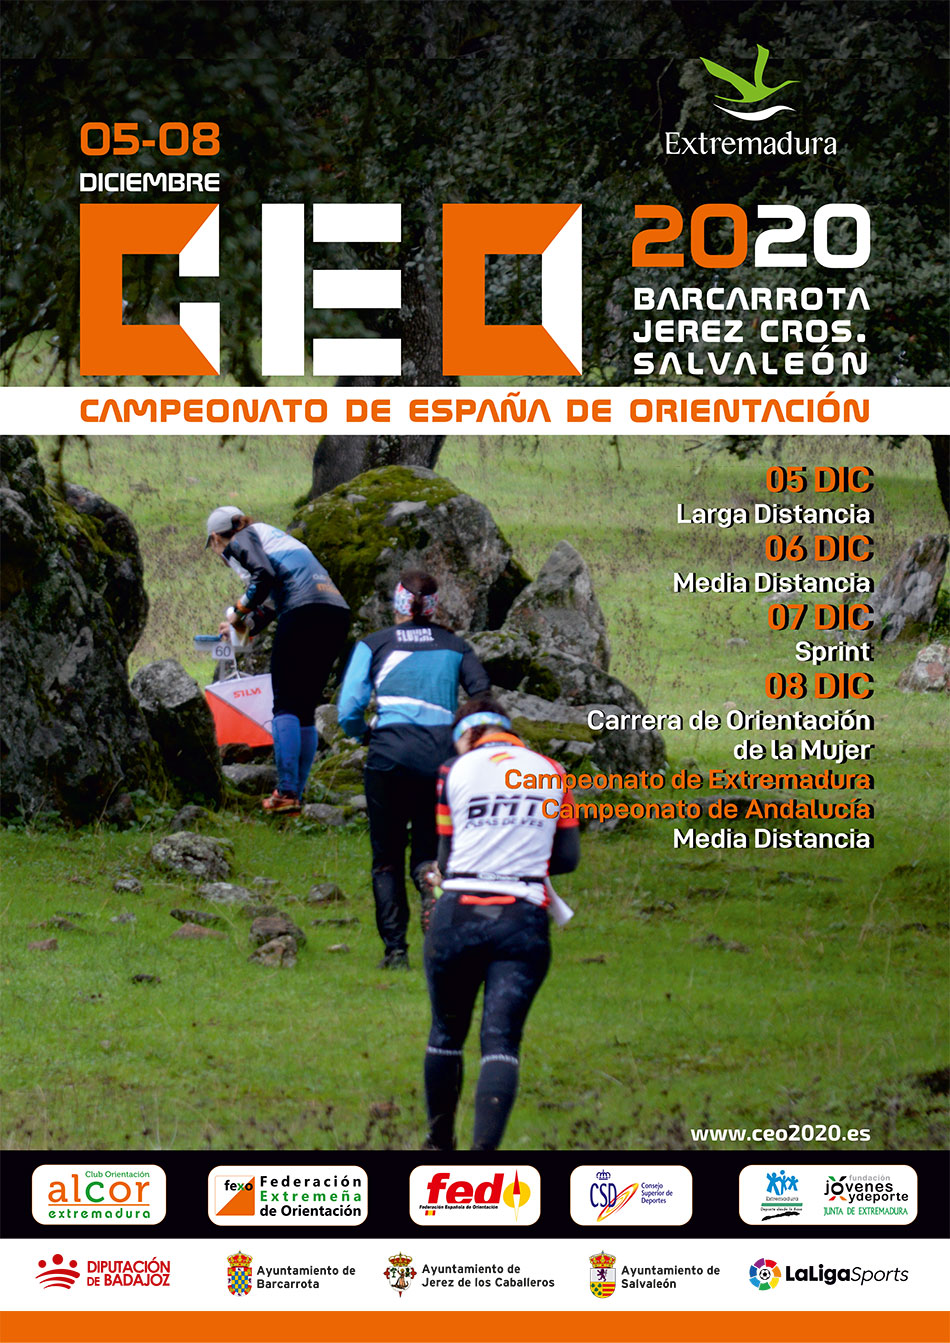 CEO 2020 Extremadura